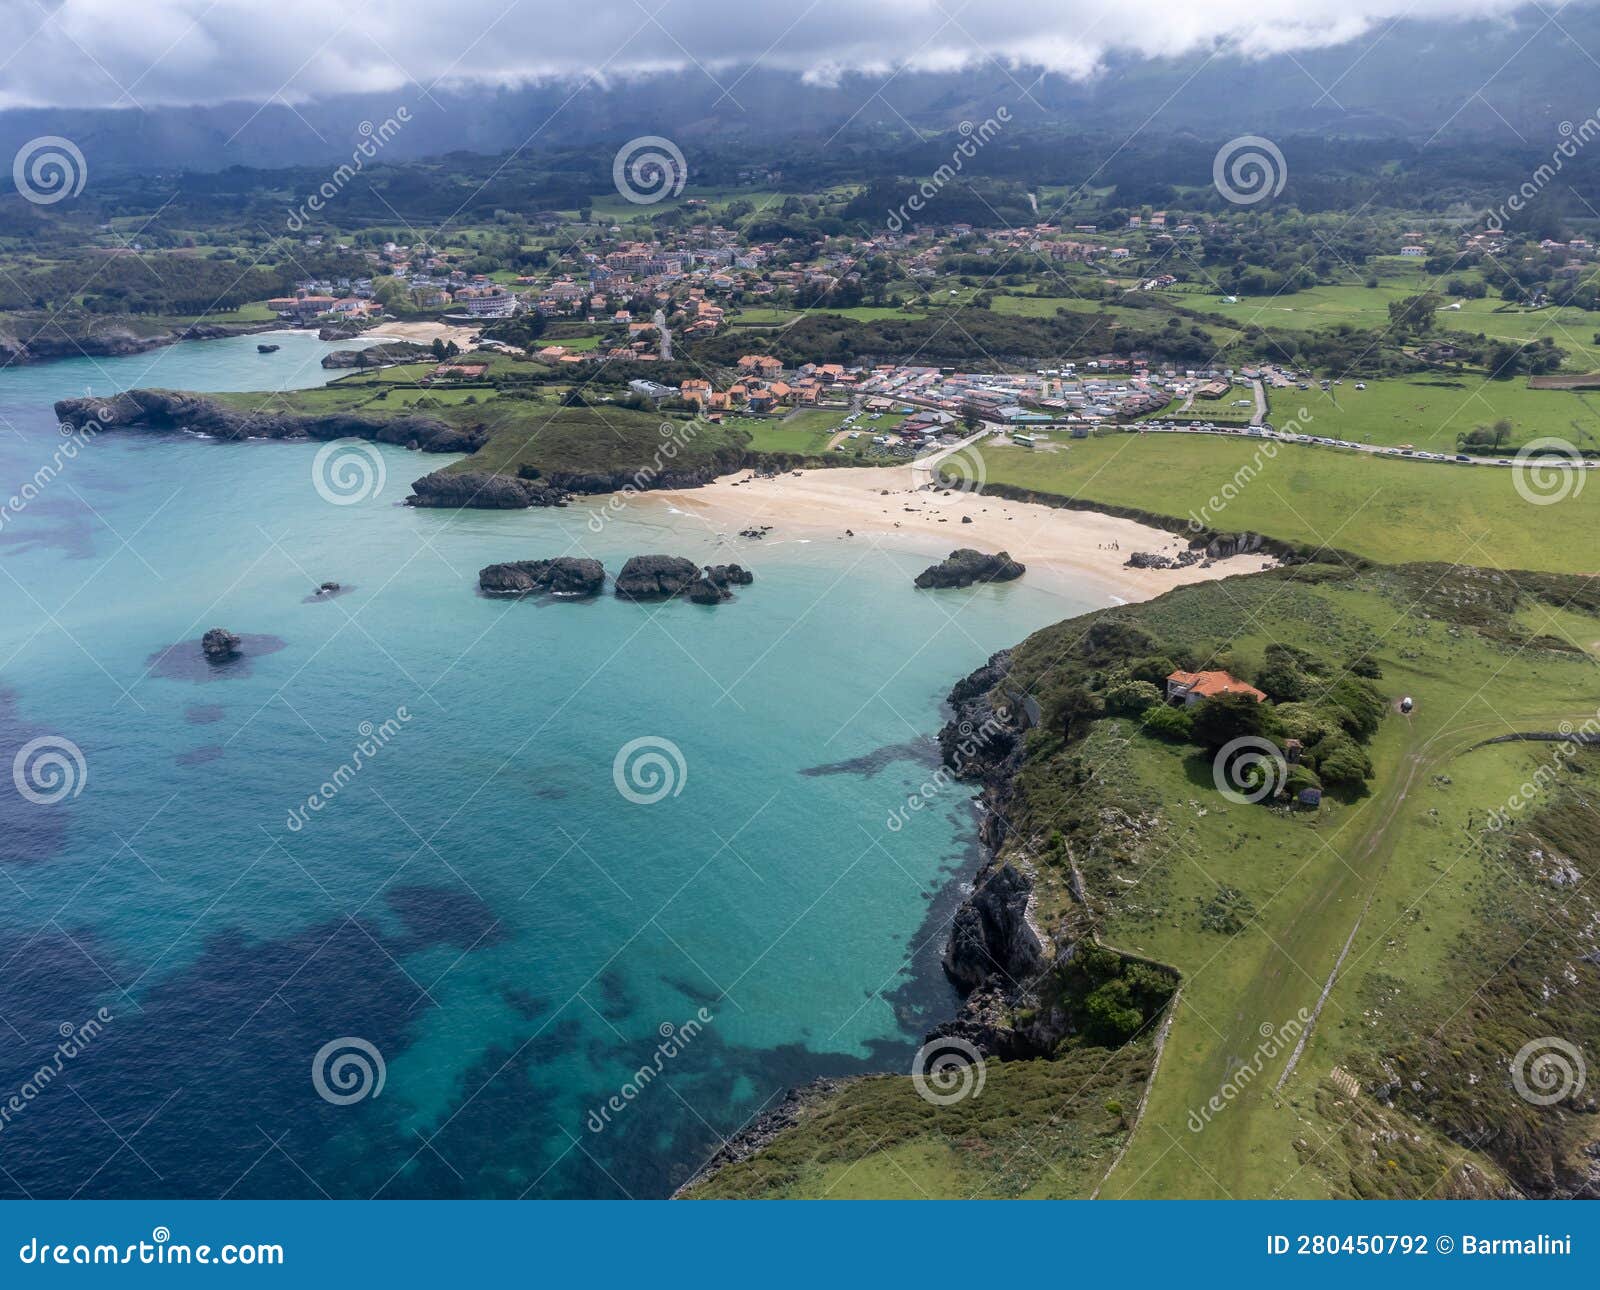 aerial view on playa de palombina, las camaras and celorio, green coast of asturias, north spain with sandy beaches, cliffs,